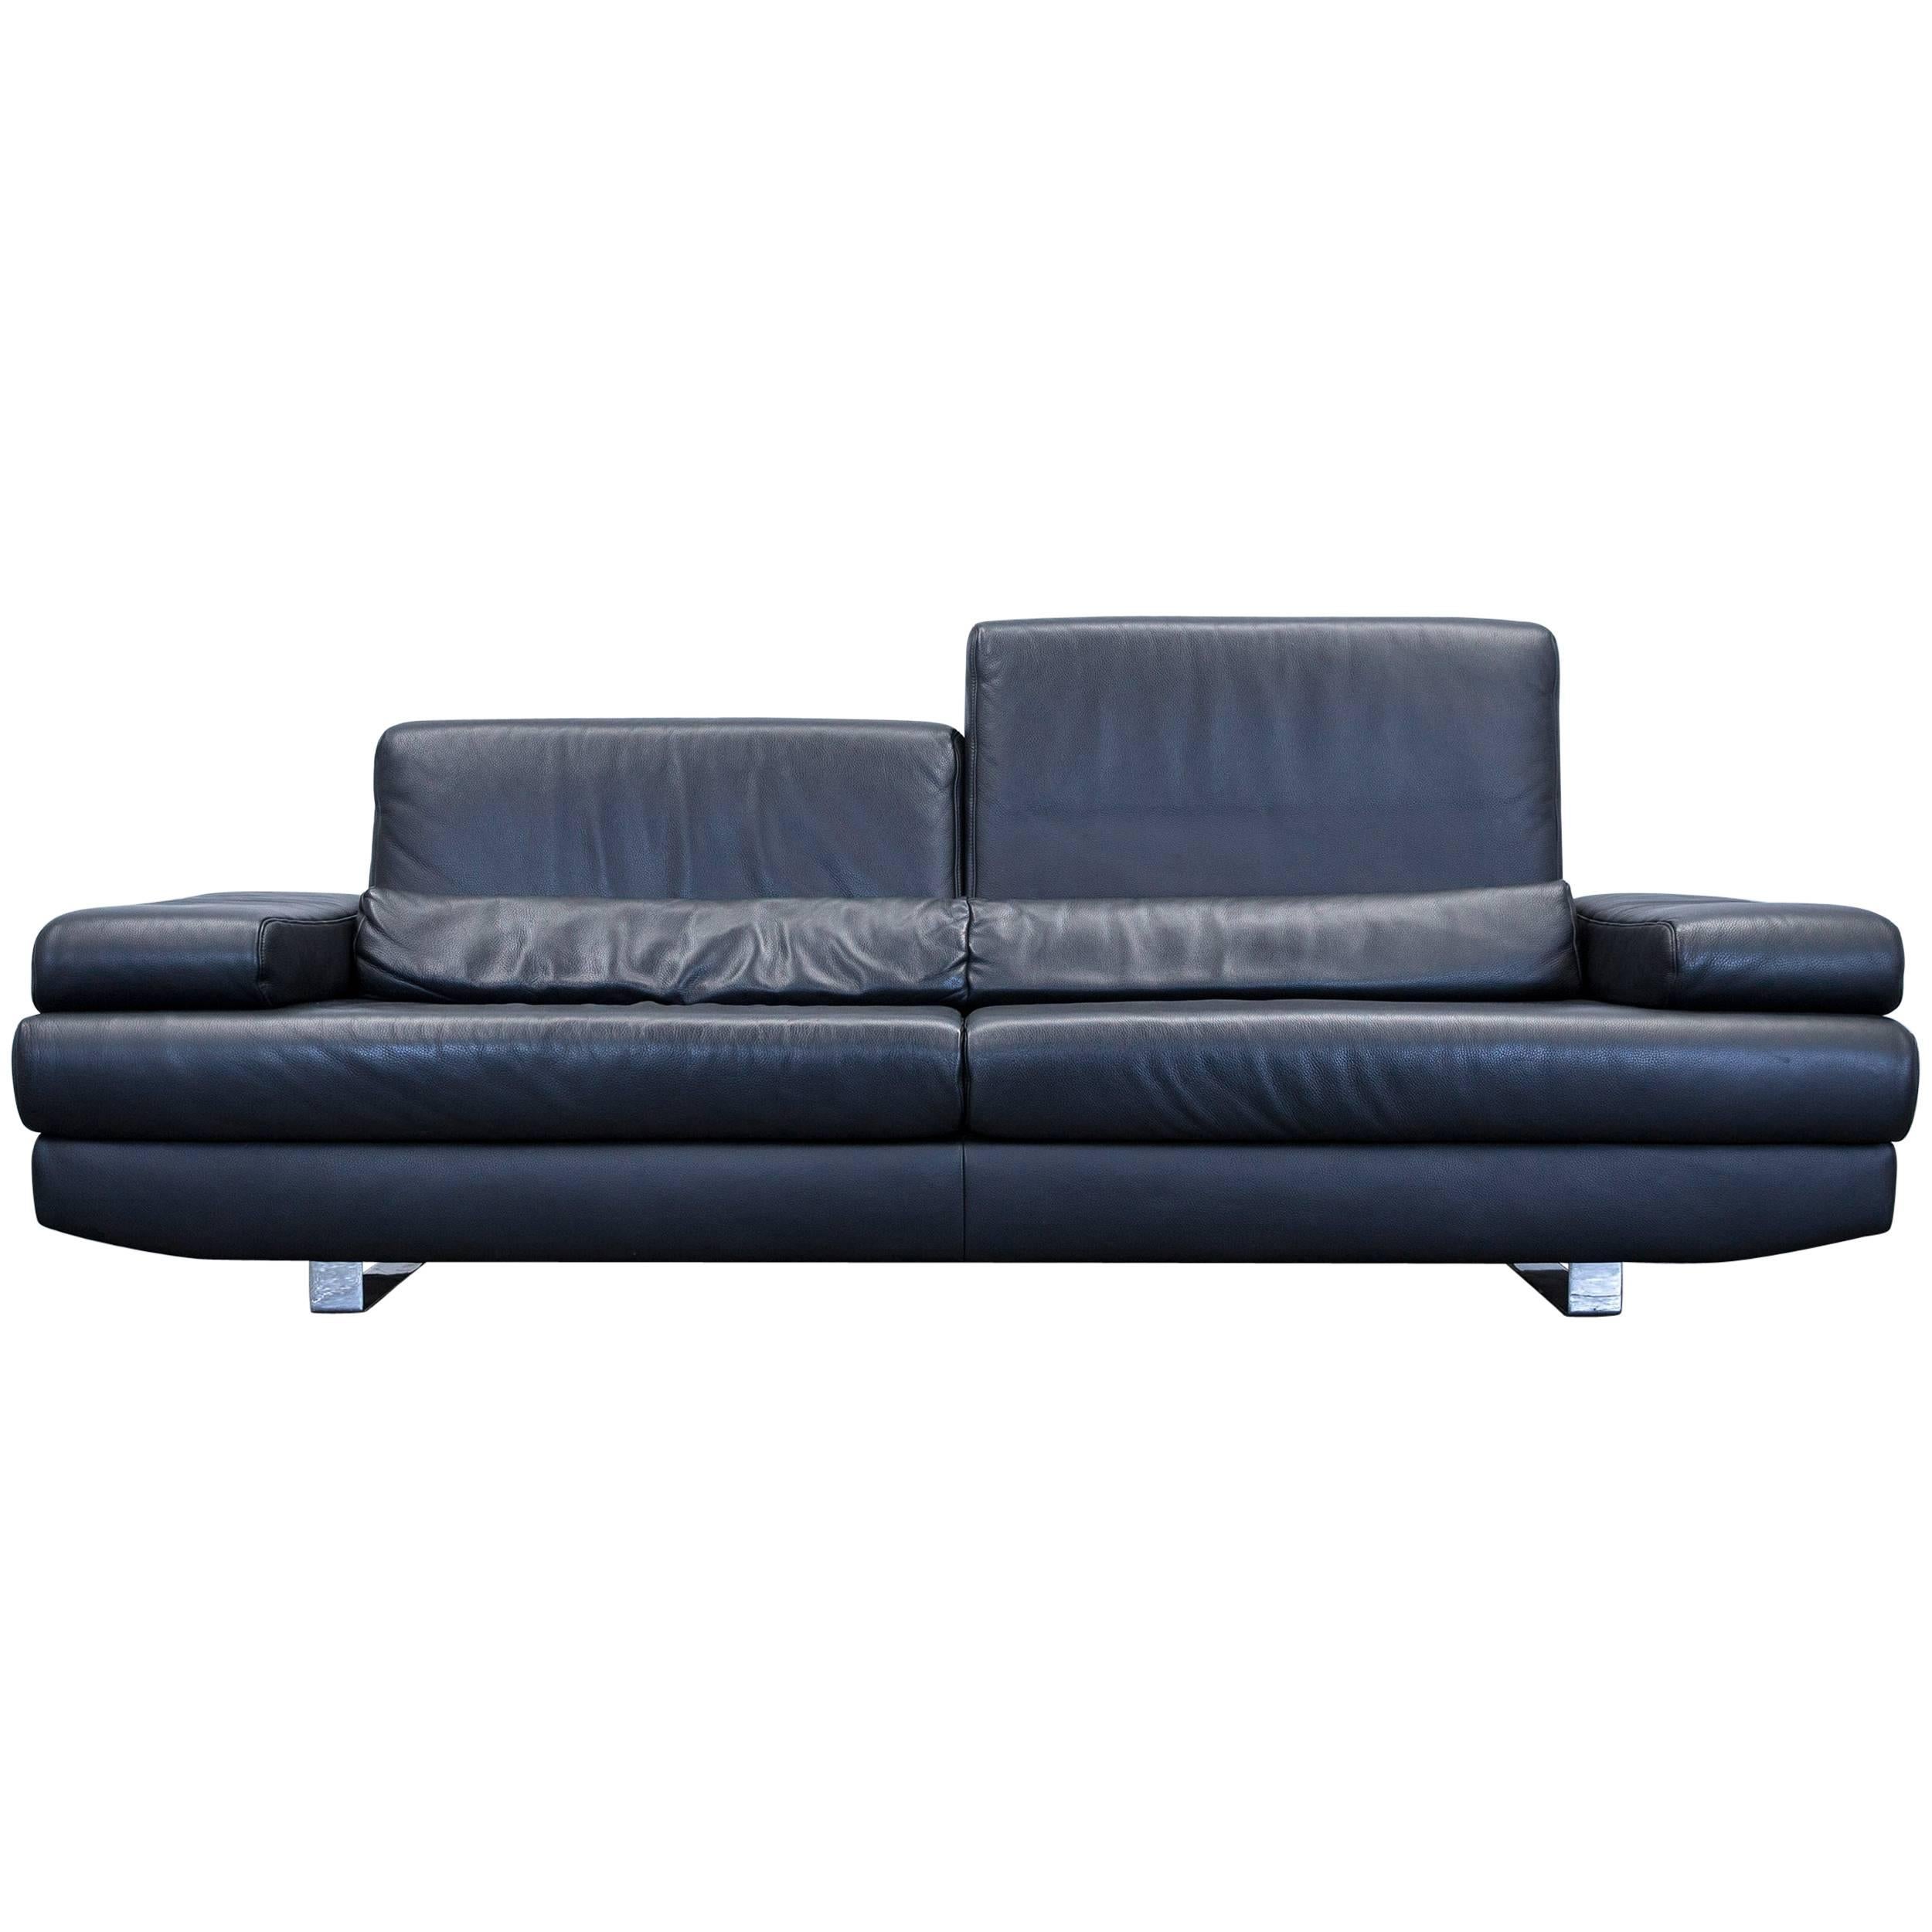 Ewald Schillig Harry Designer Sofa Leather Black Three-Seat Function Couch